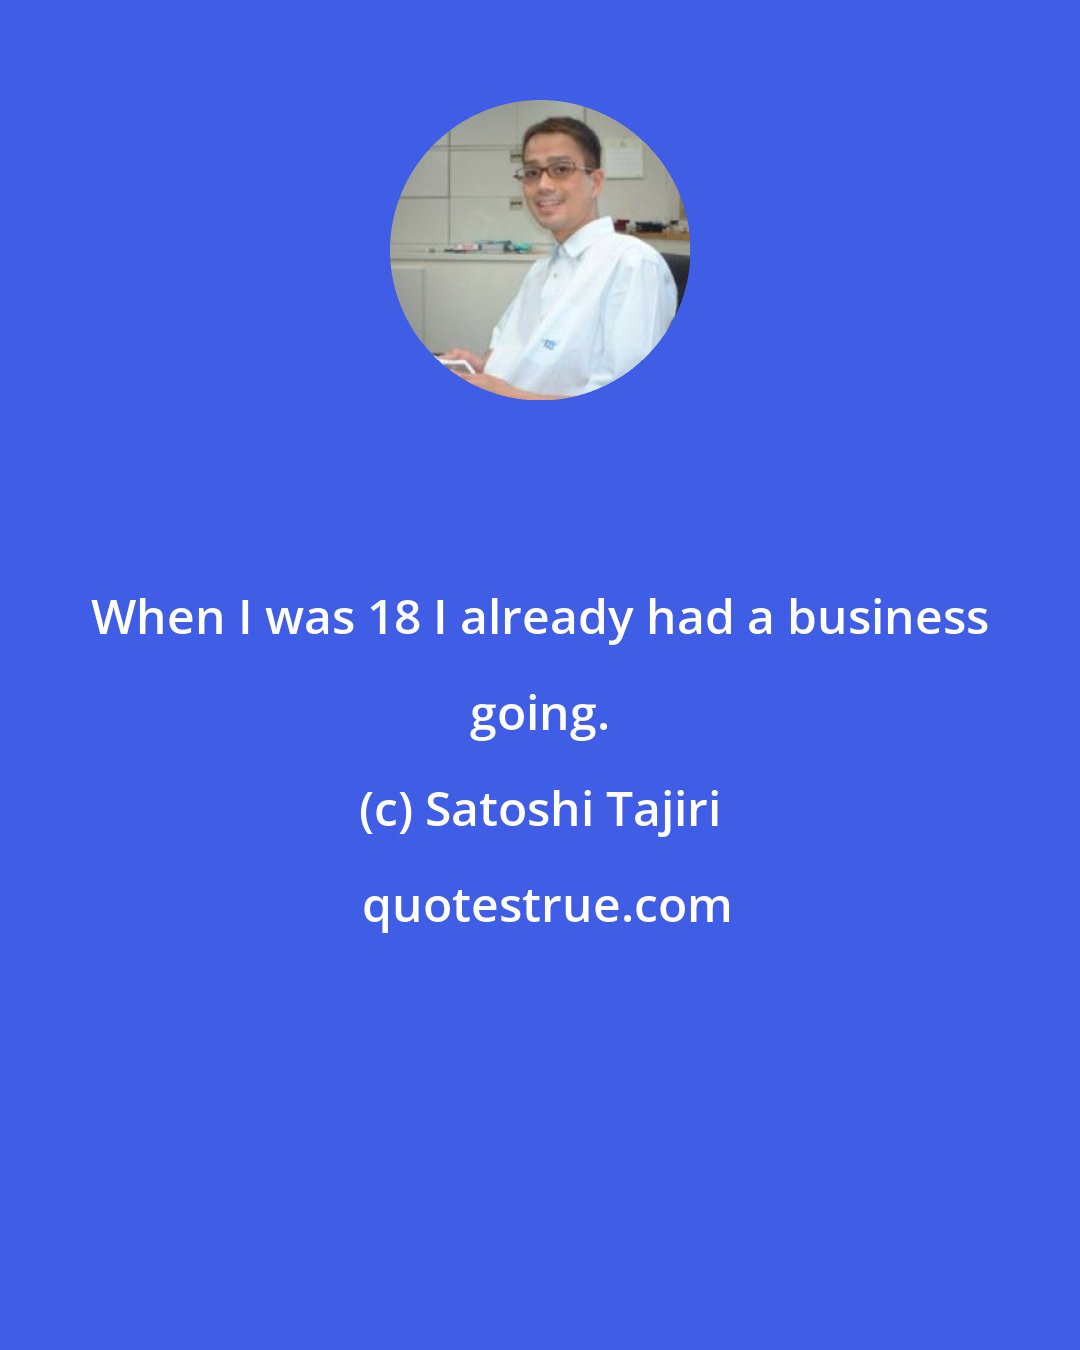 Satoshi Tajiri: When I was 18 I already had a business going.